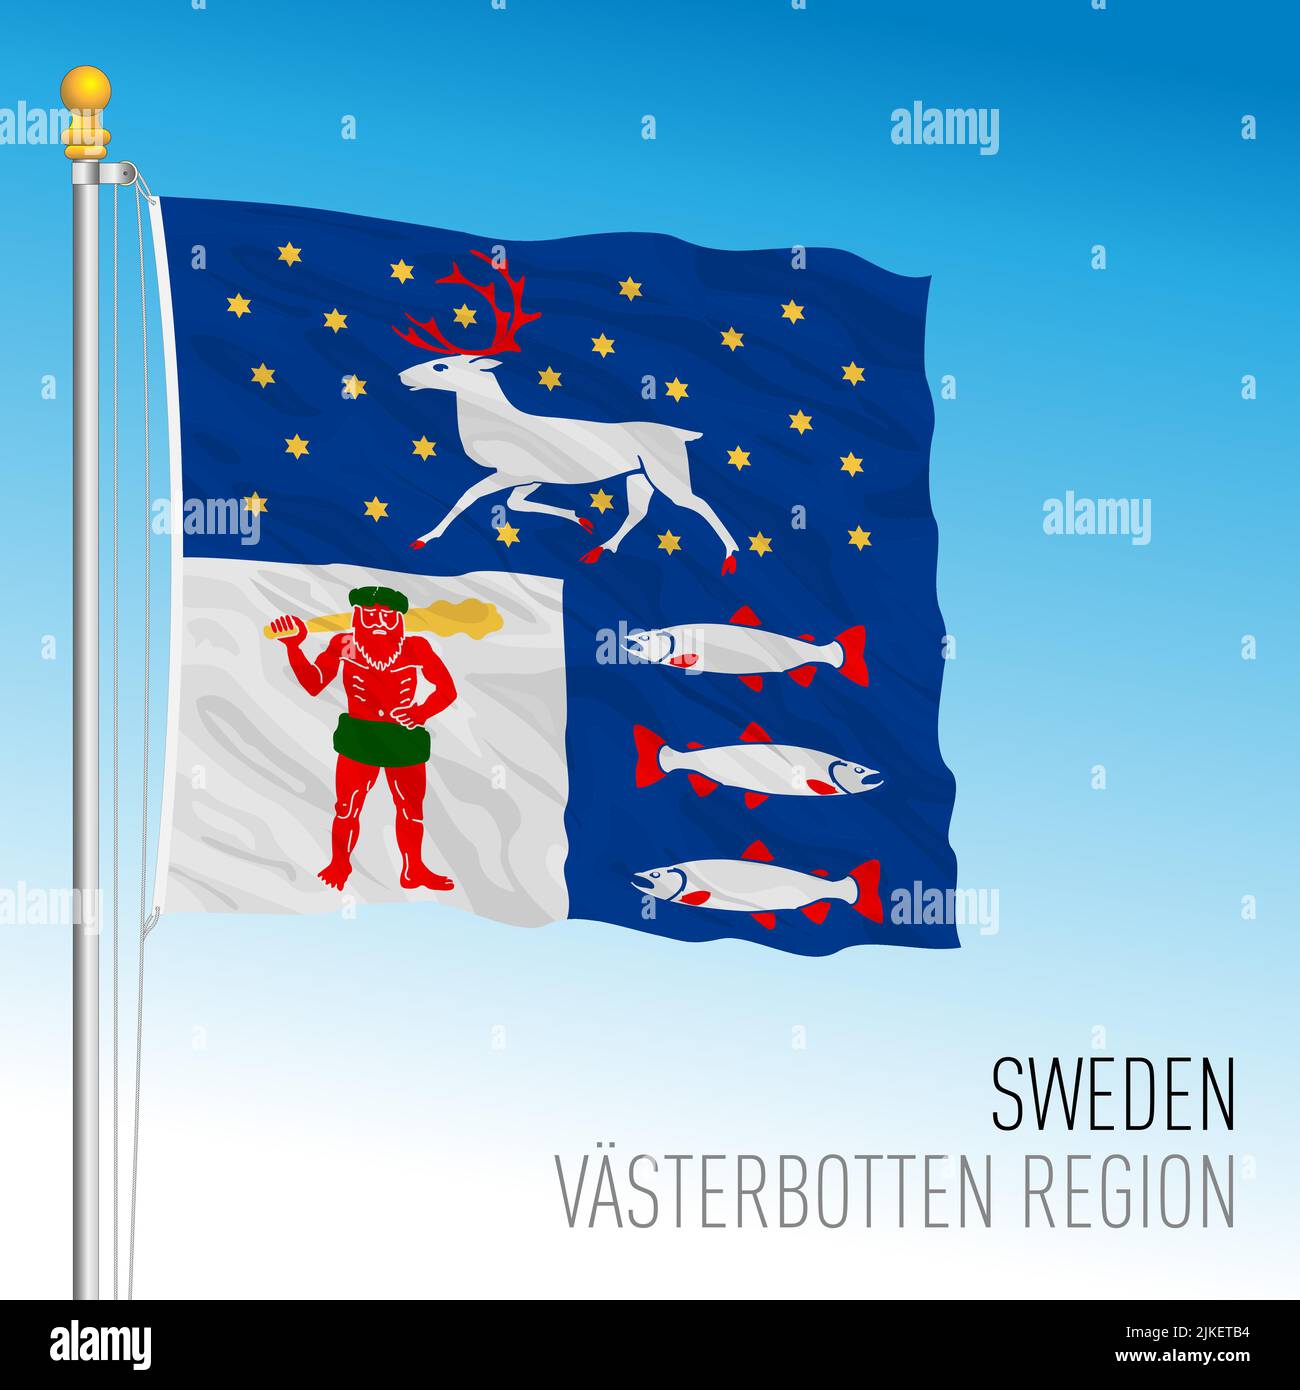 Vasterbotten county regional flag, Kingdom of Sweden, vector illustration Stock Vector